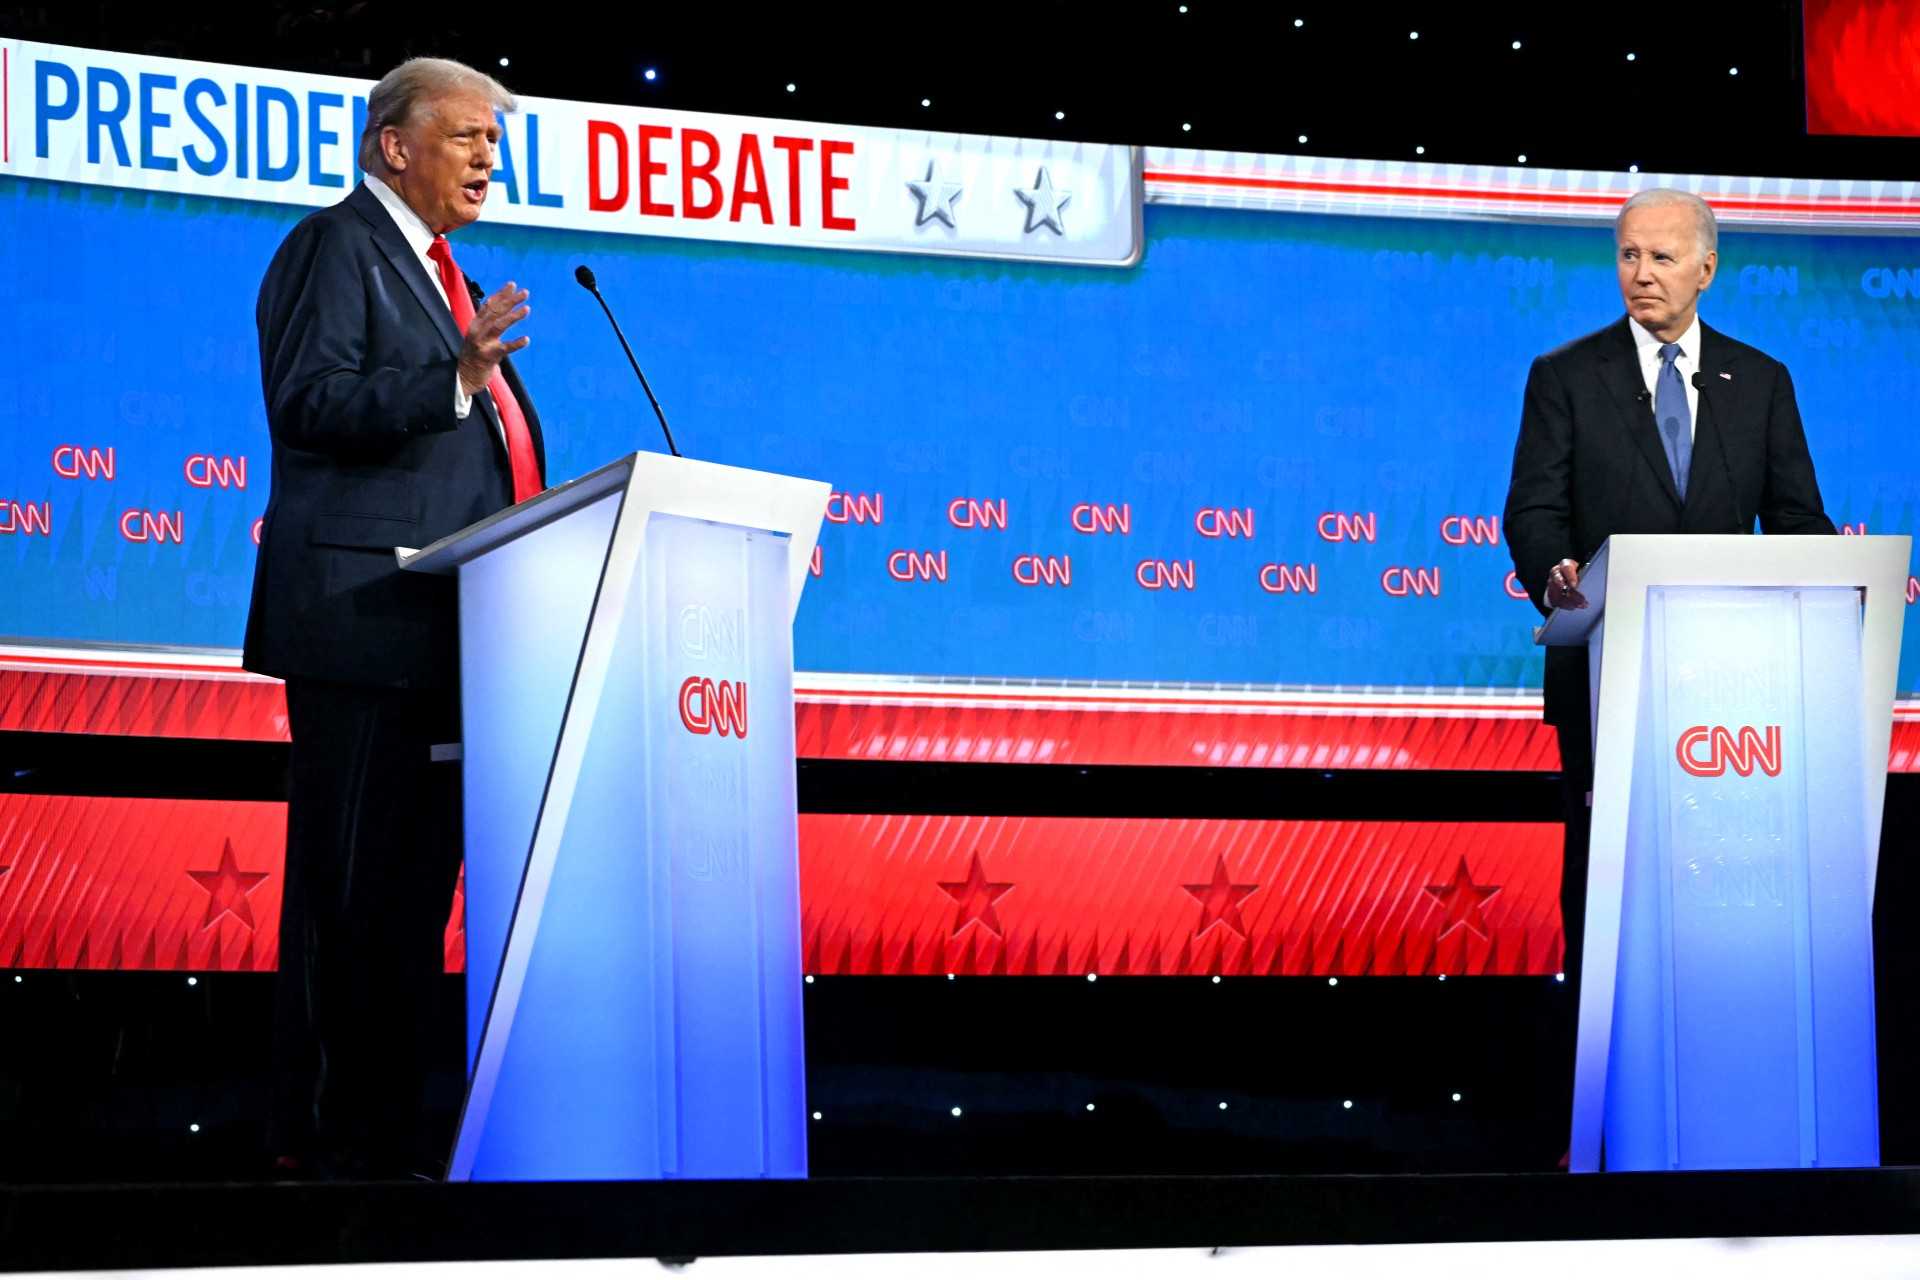 Live updates: Biden, Trump face off in historical presidential debate